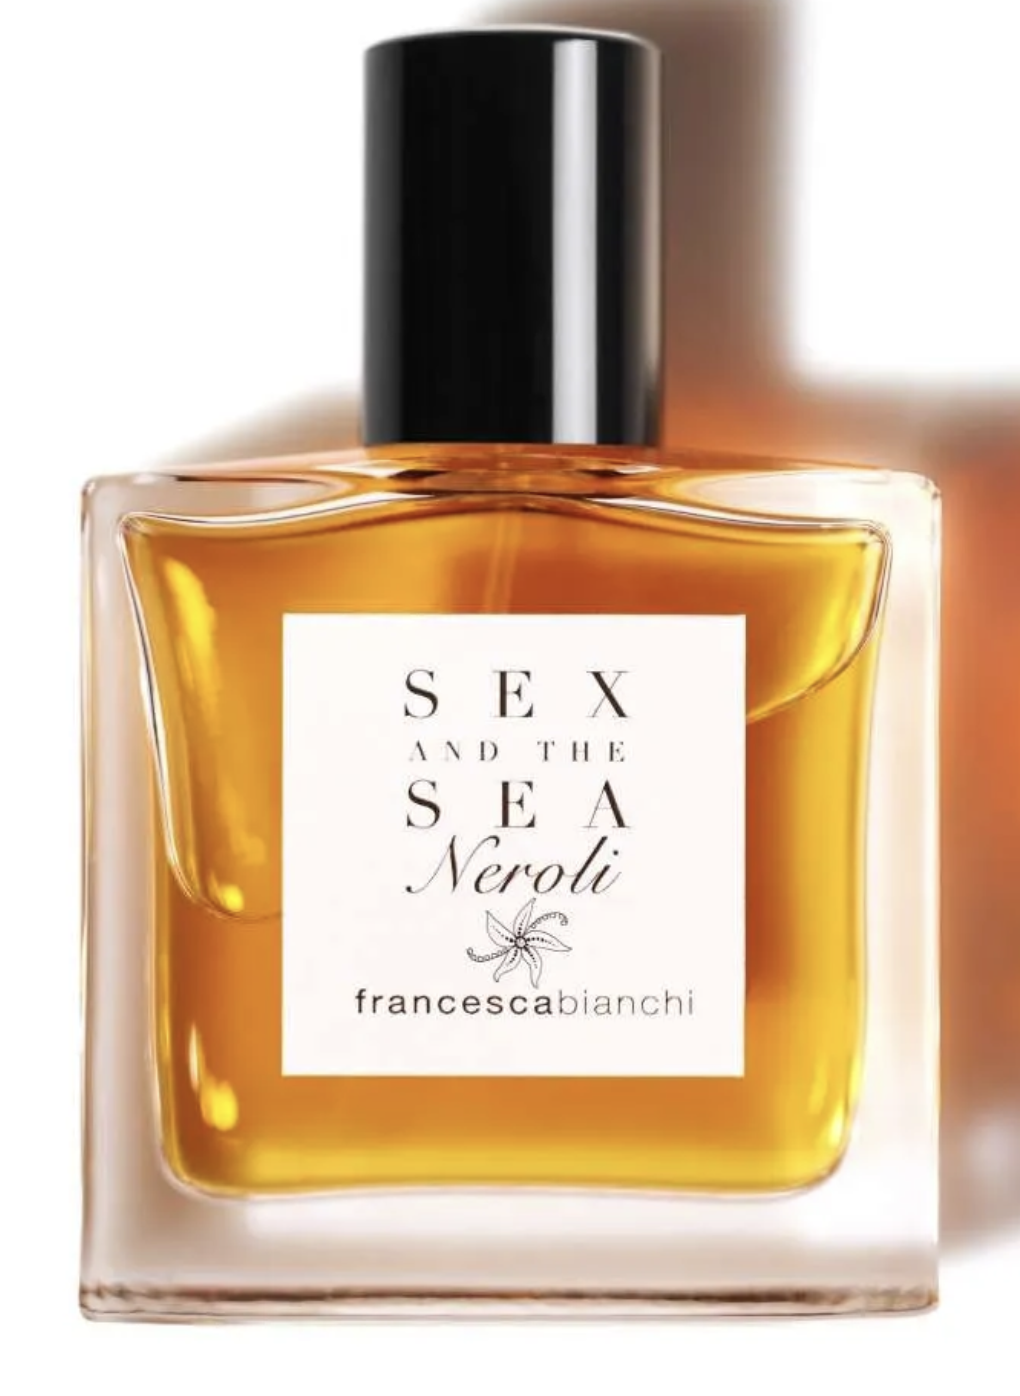 FRANCESCA BIANCHI SEX AND THE SEA NEROLI EXTRAIT DE PARFUM 30ML